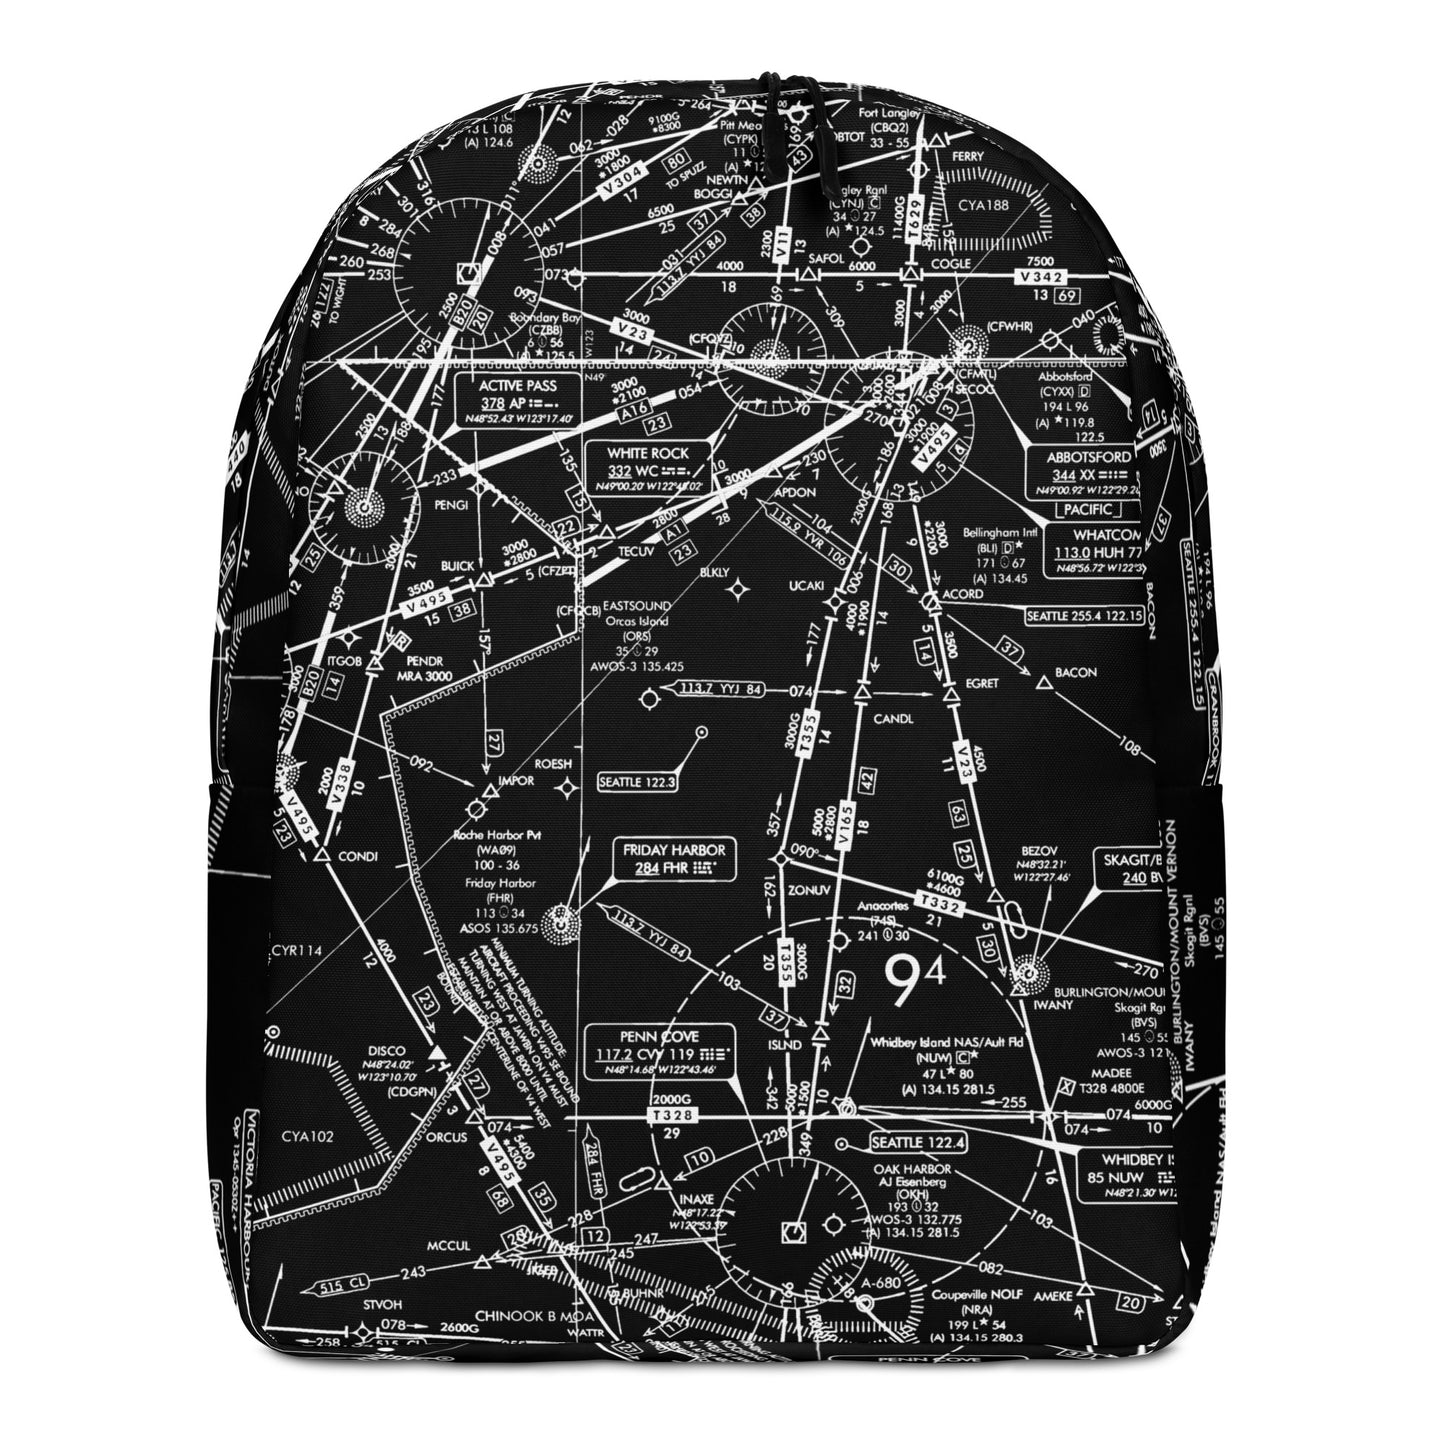 Enroute Low Altitude (ELUS1) Minimalist Backpack (b&w)